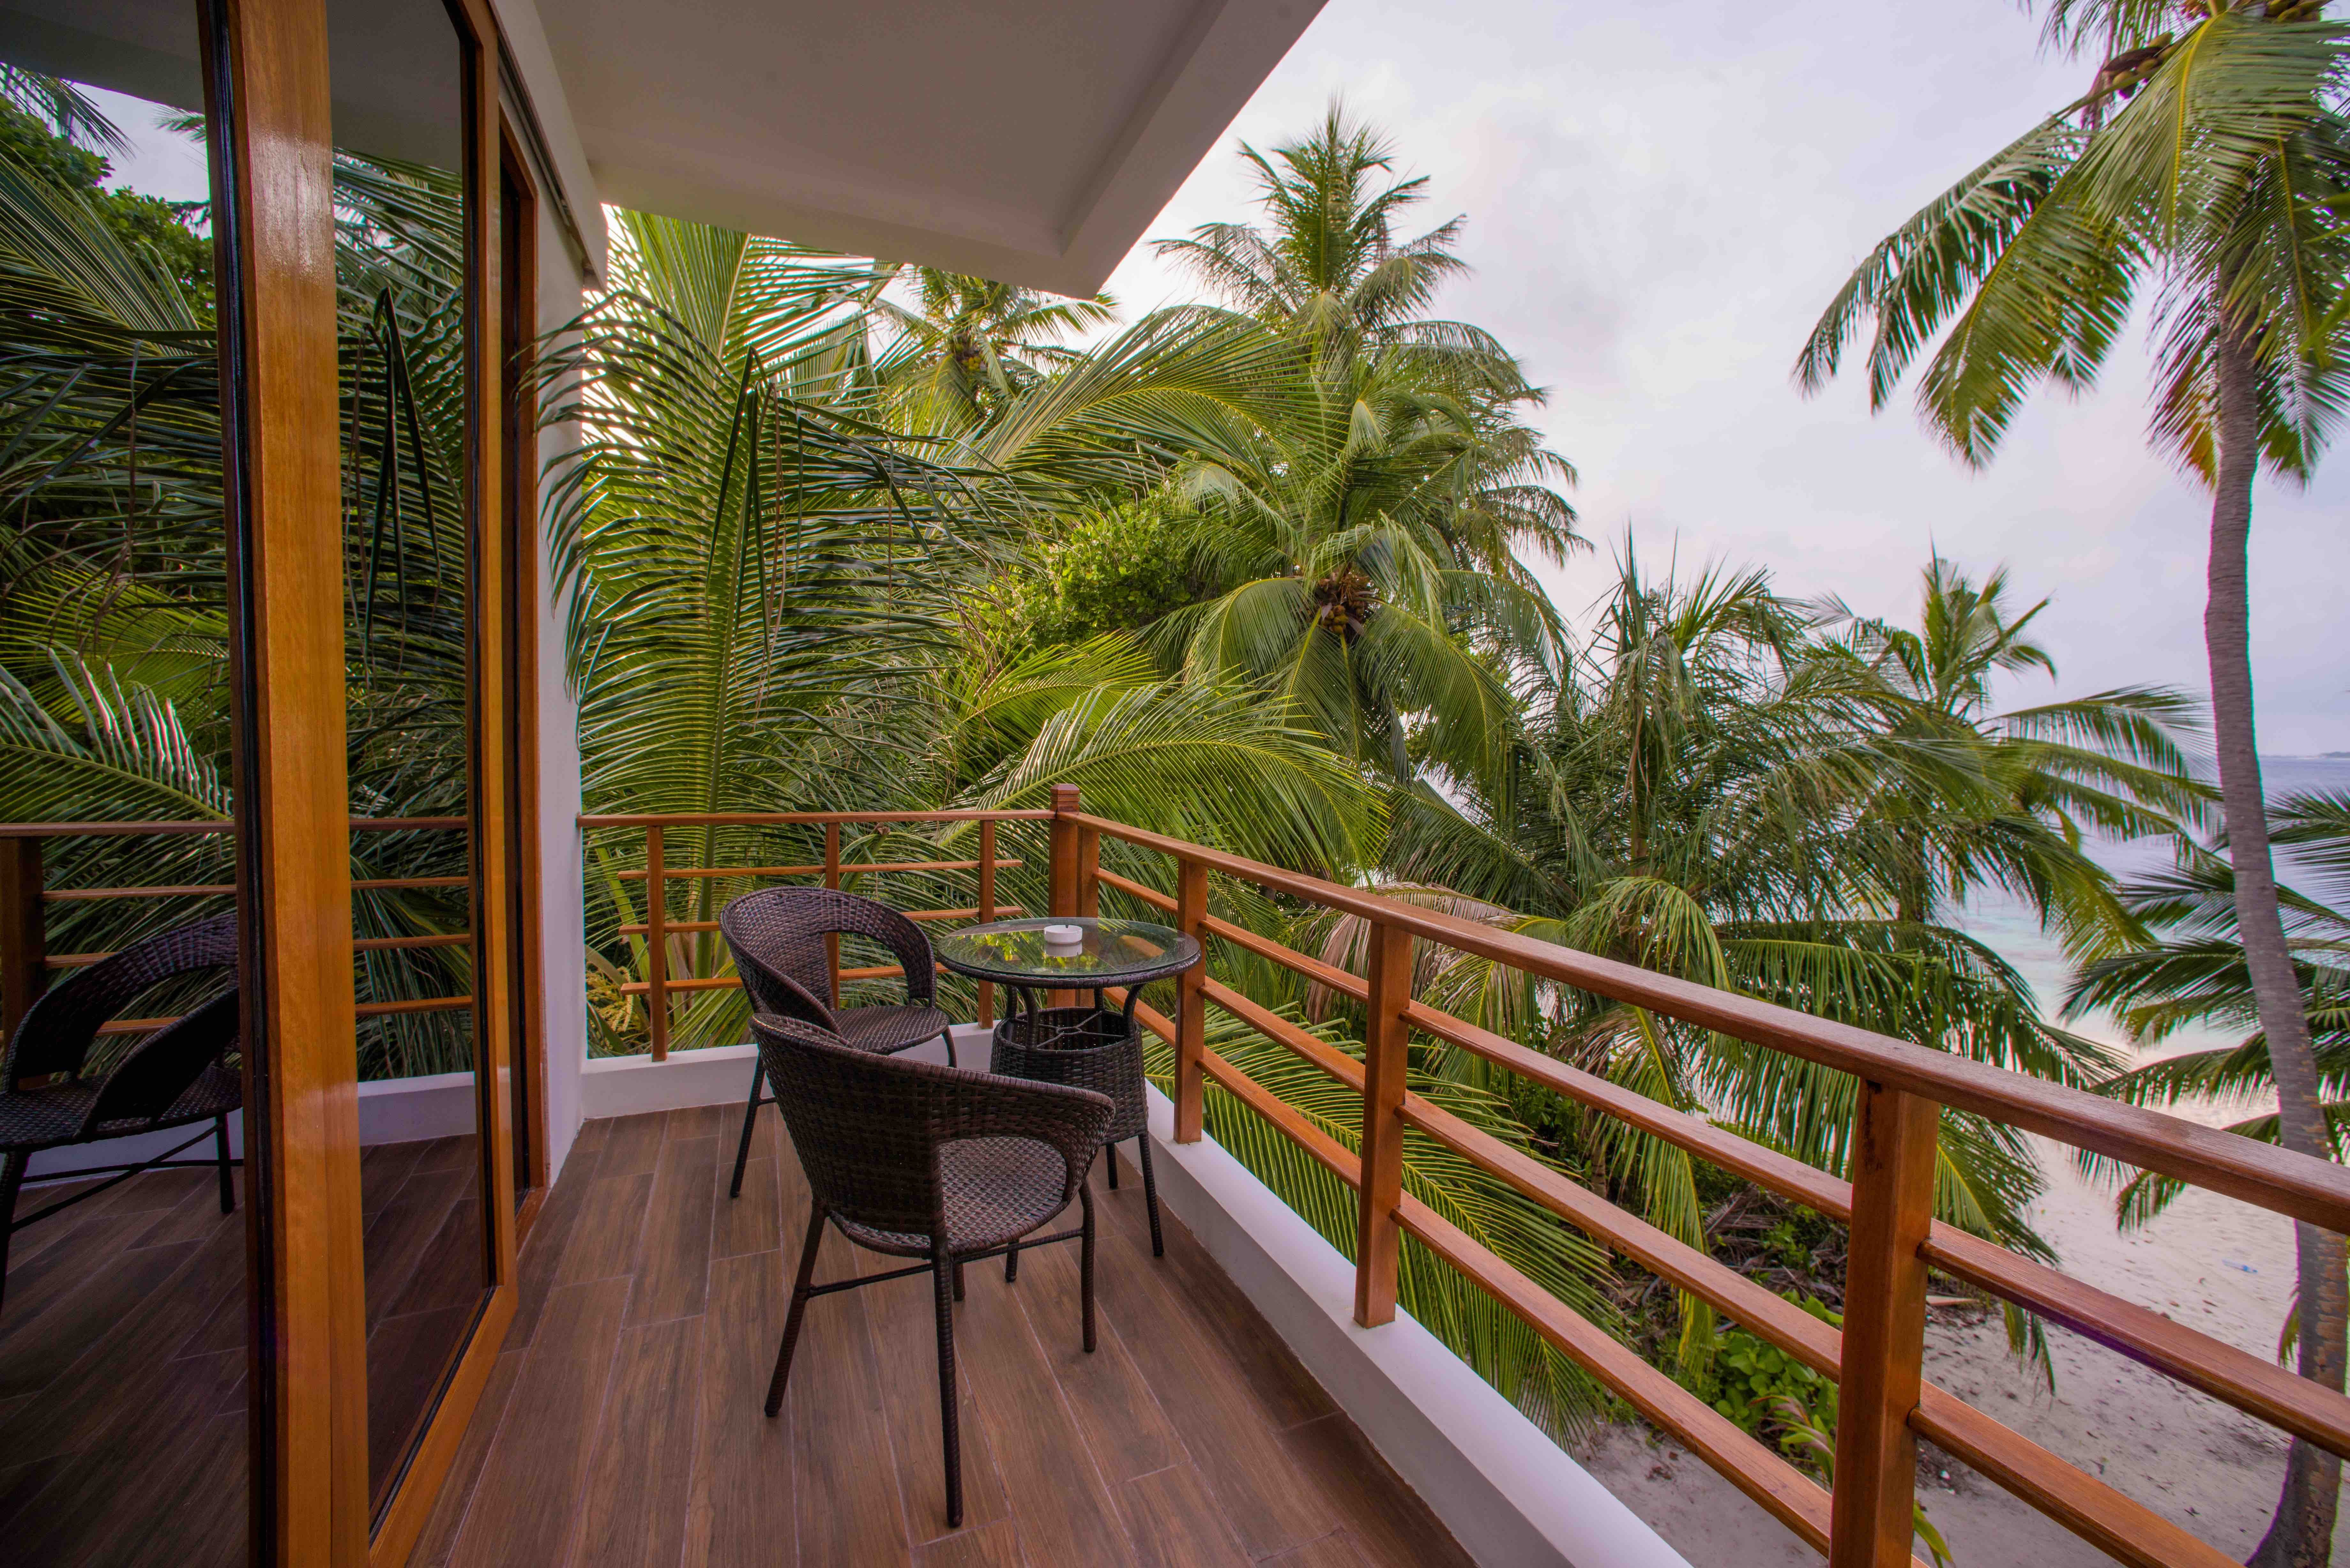 Luxury island. Kiha Beach Мальдивы. Балкон Тайланд. Отель Пальма. Пальмы на террасе.